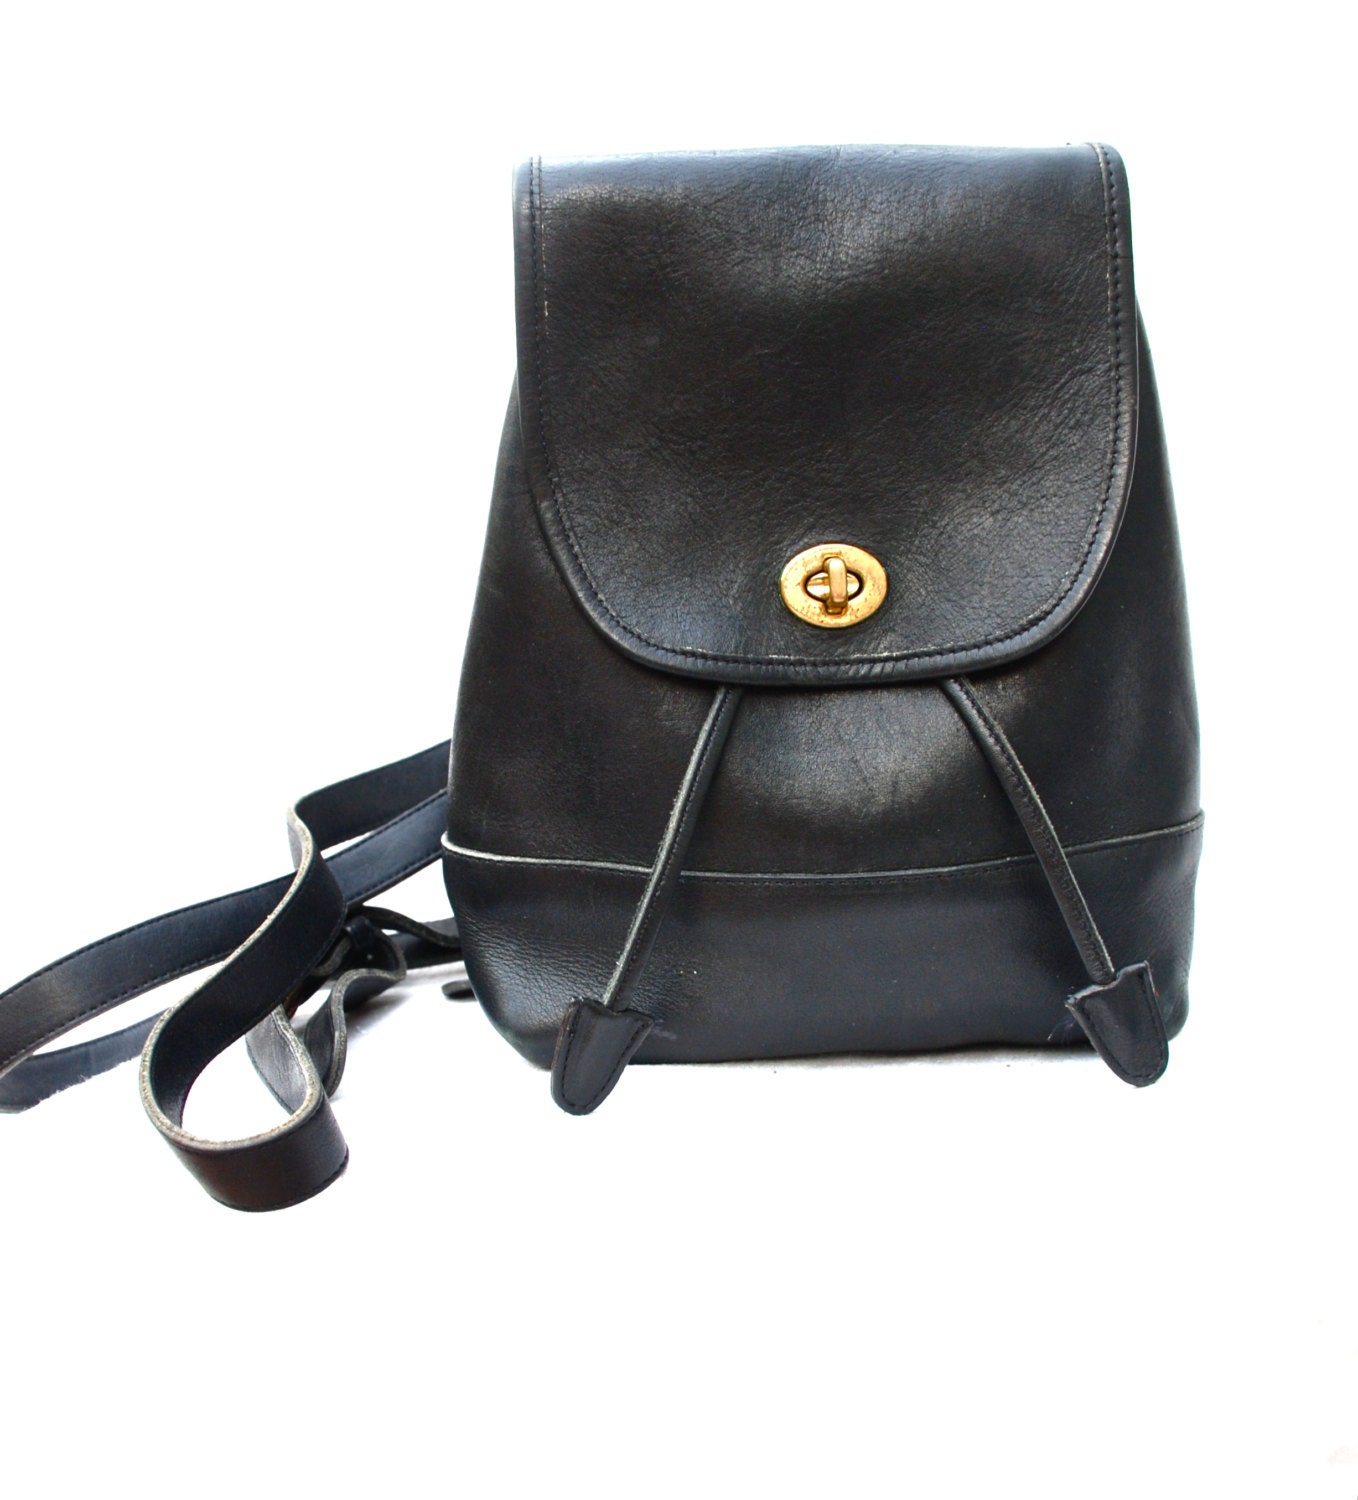 Black Leather Mini Backpack Purse Coach no tags